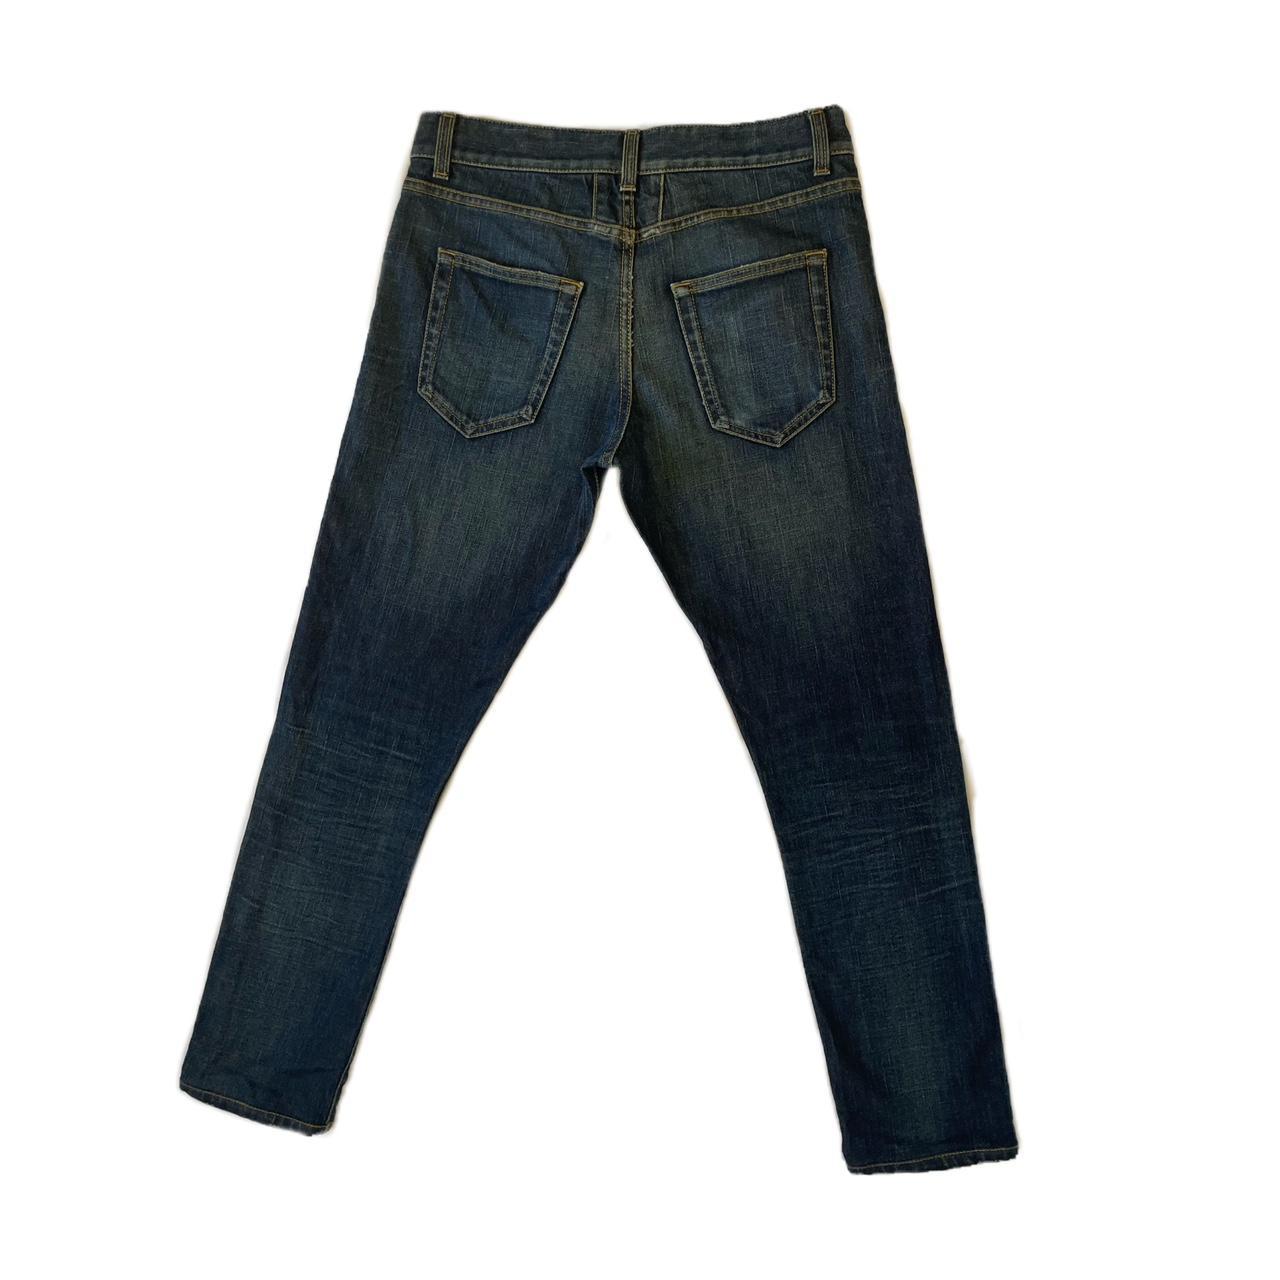 Yves Saint Laurent Men's Navy Jeans | Depop